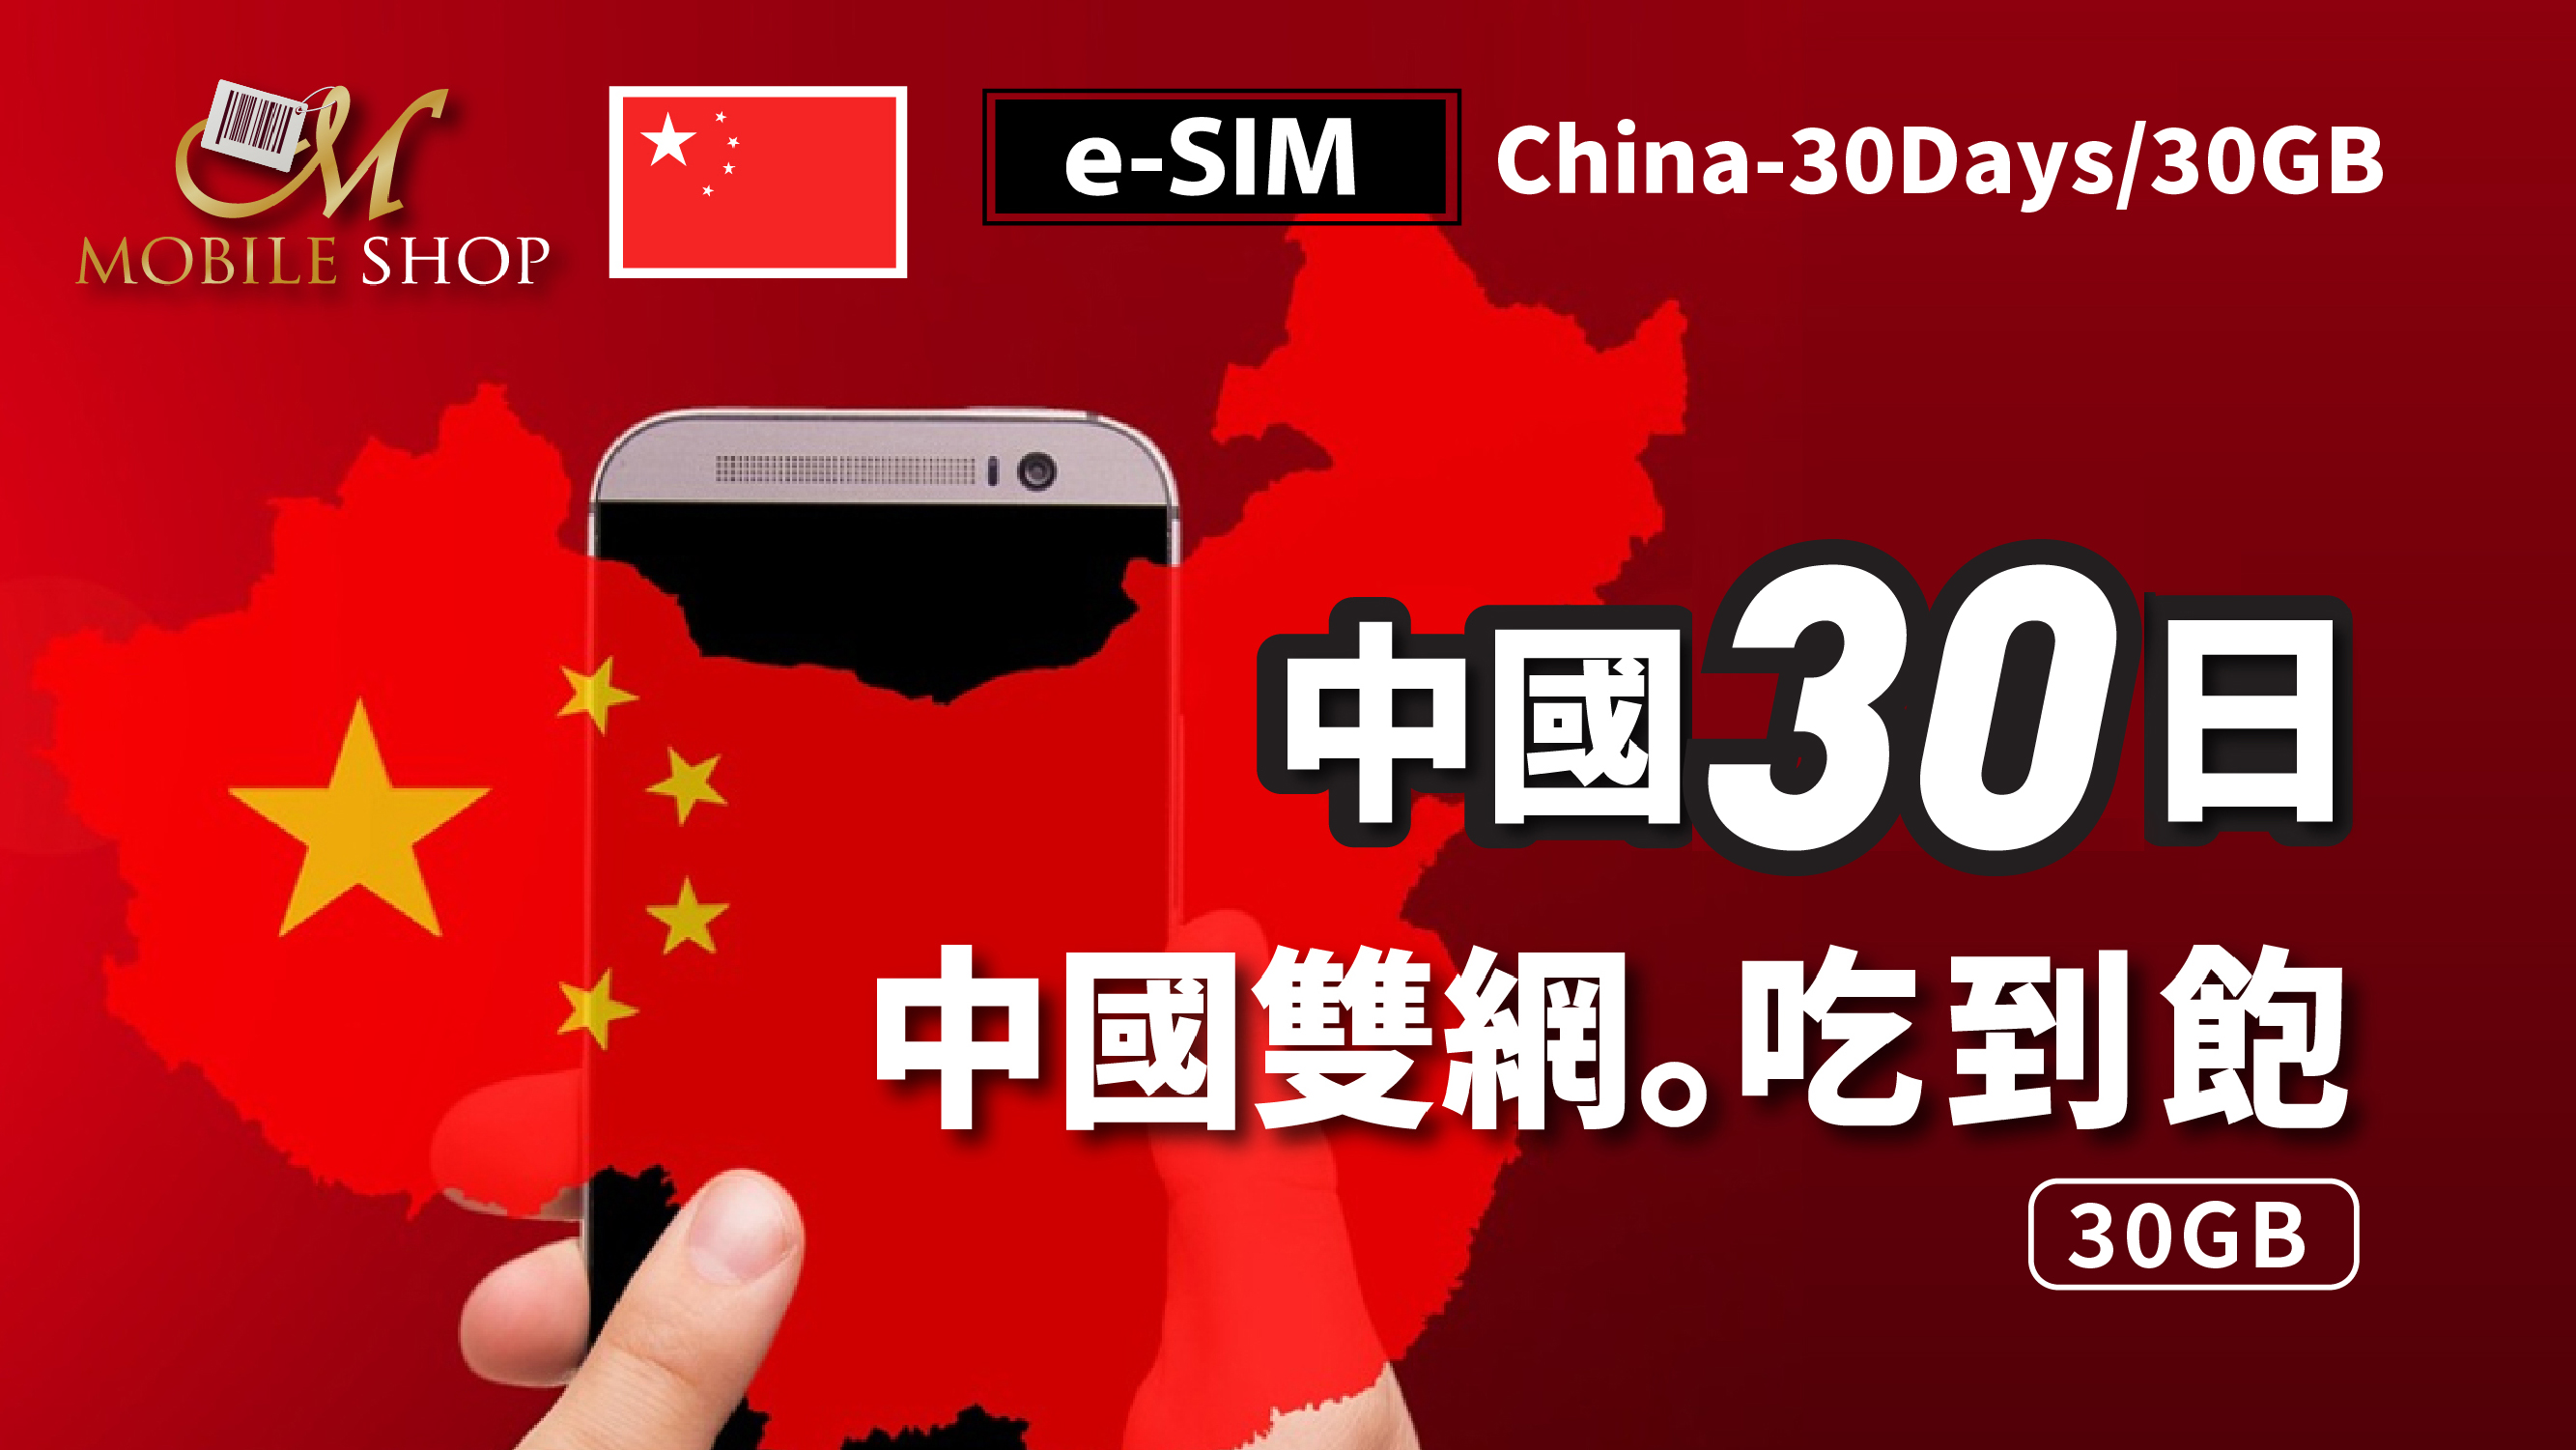 eSIM_China 30Days/30GB unlimited data